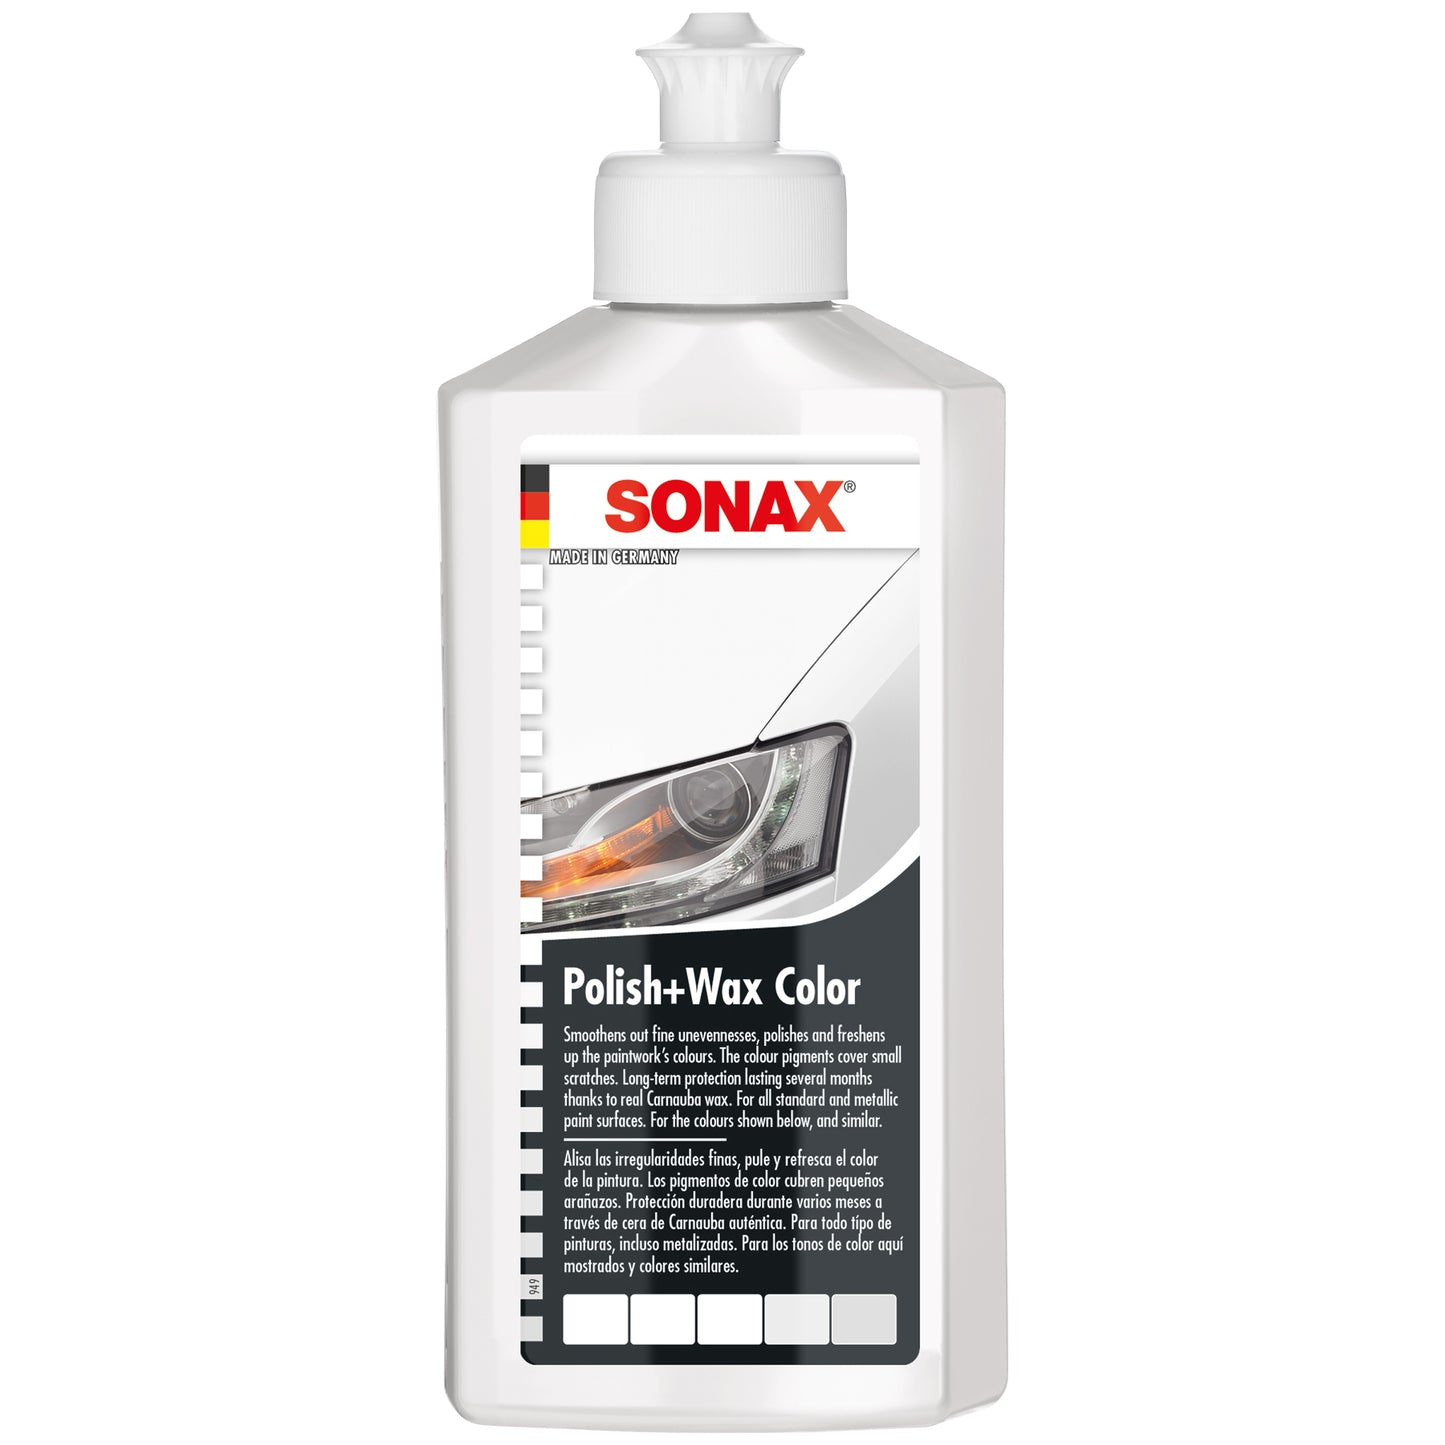 Sonax Polish + Wax Color (White) 250ml